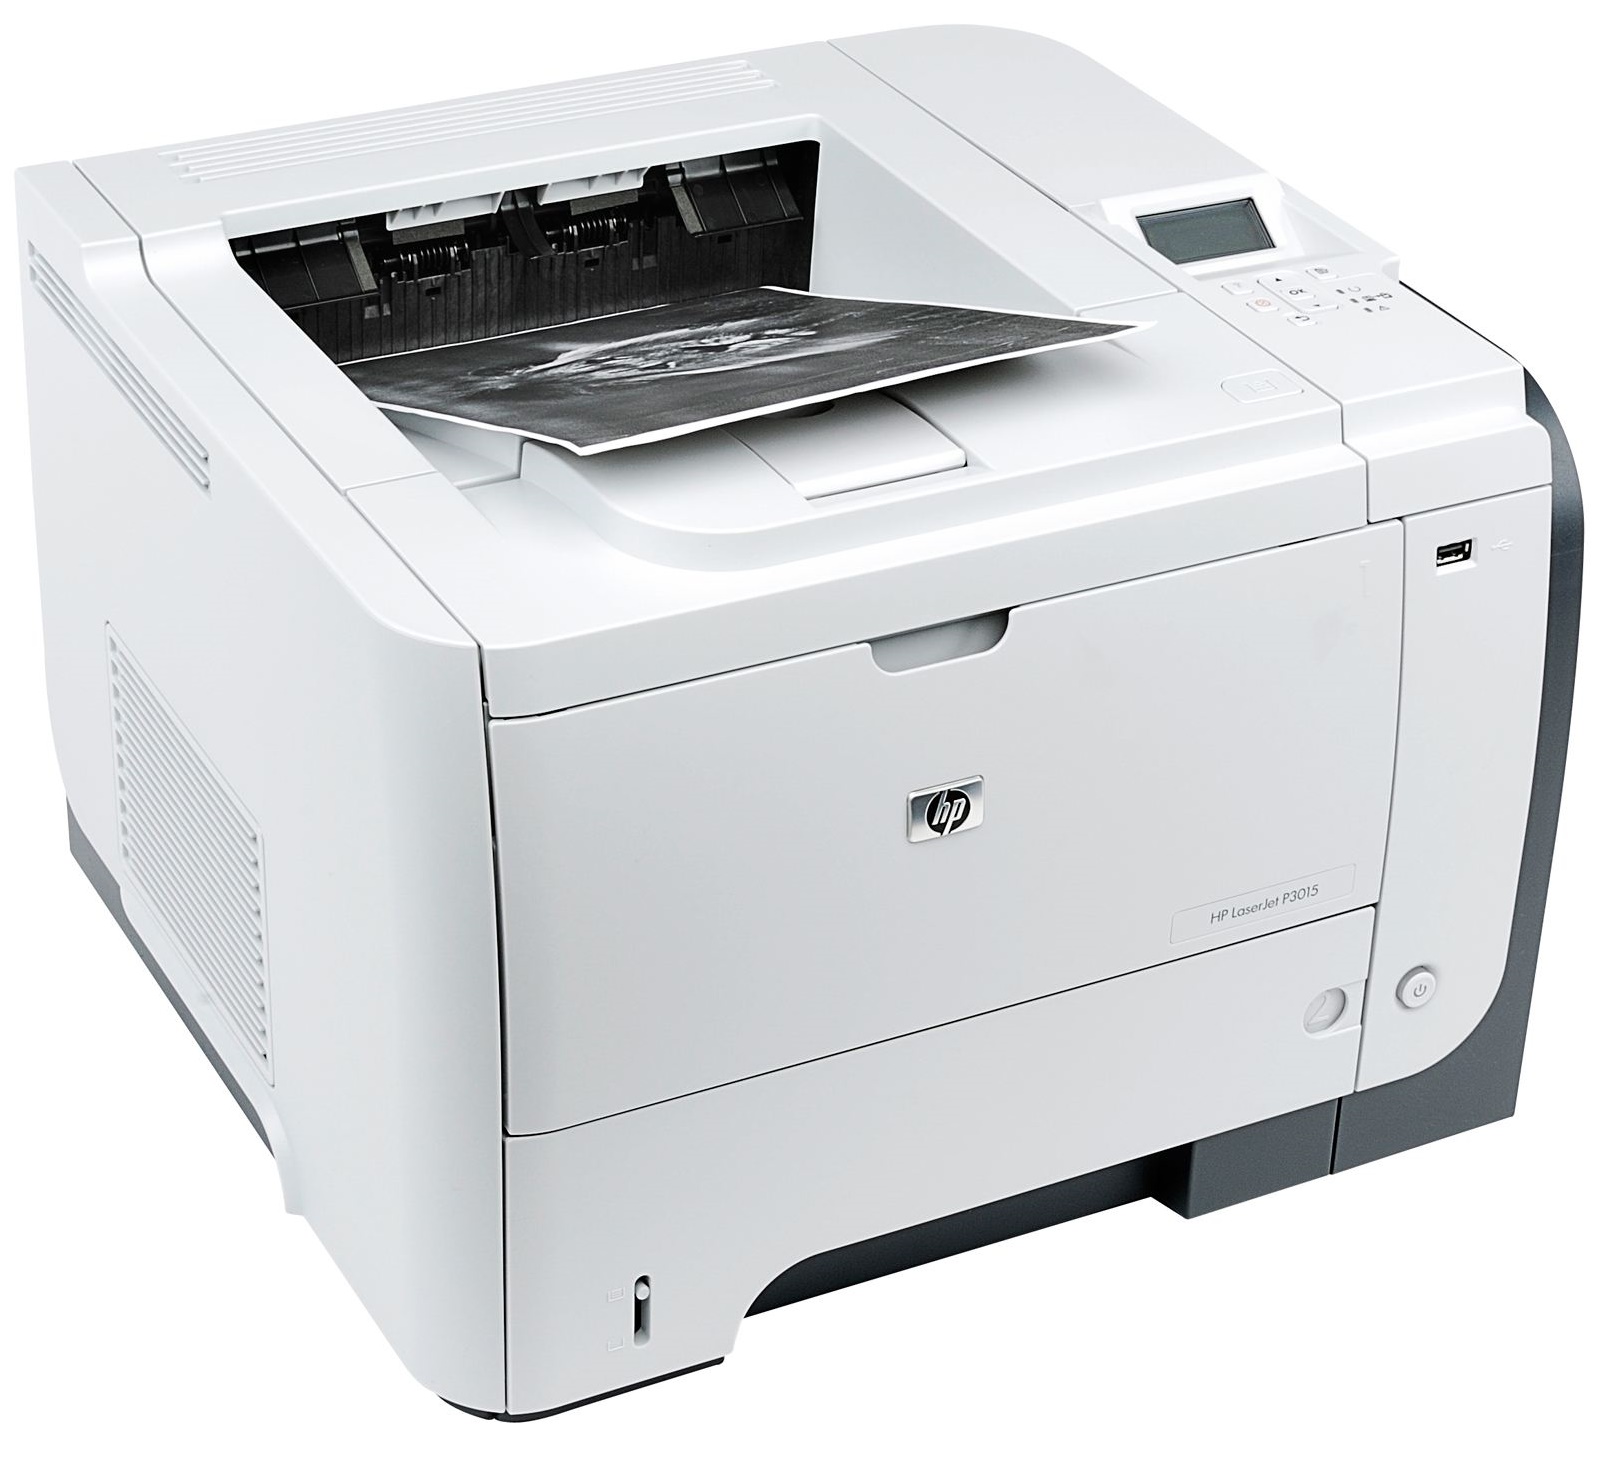 arbejdsløshed Rummet Skyldig HP P3015 LaserJet Printer RECONDITIONED - CopyFaxes